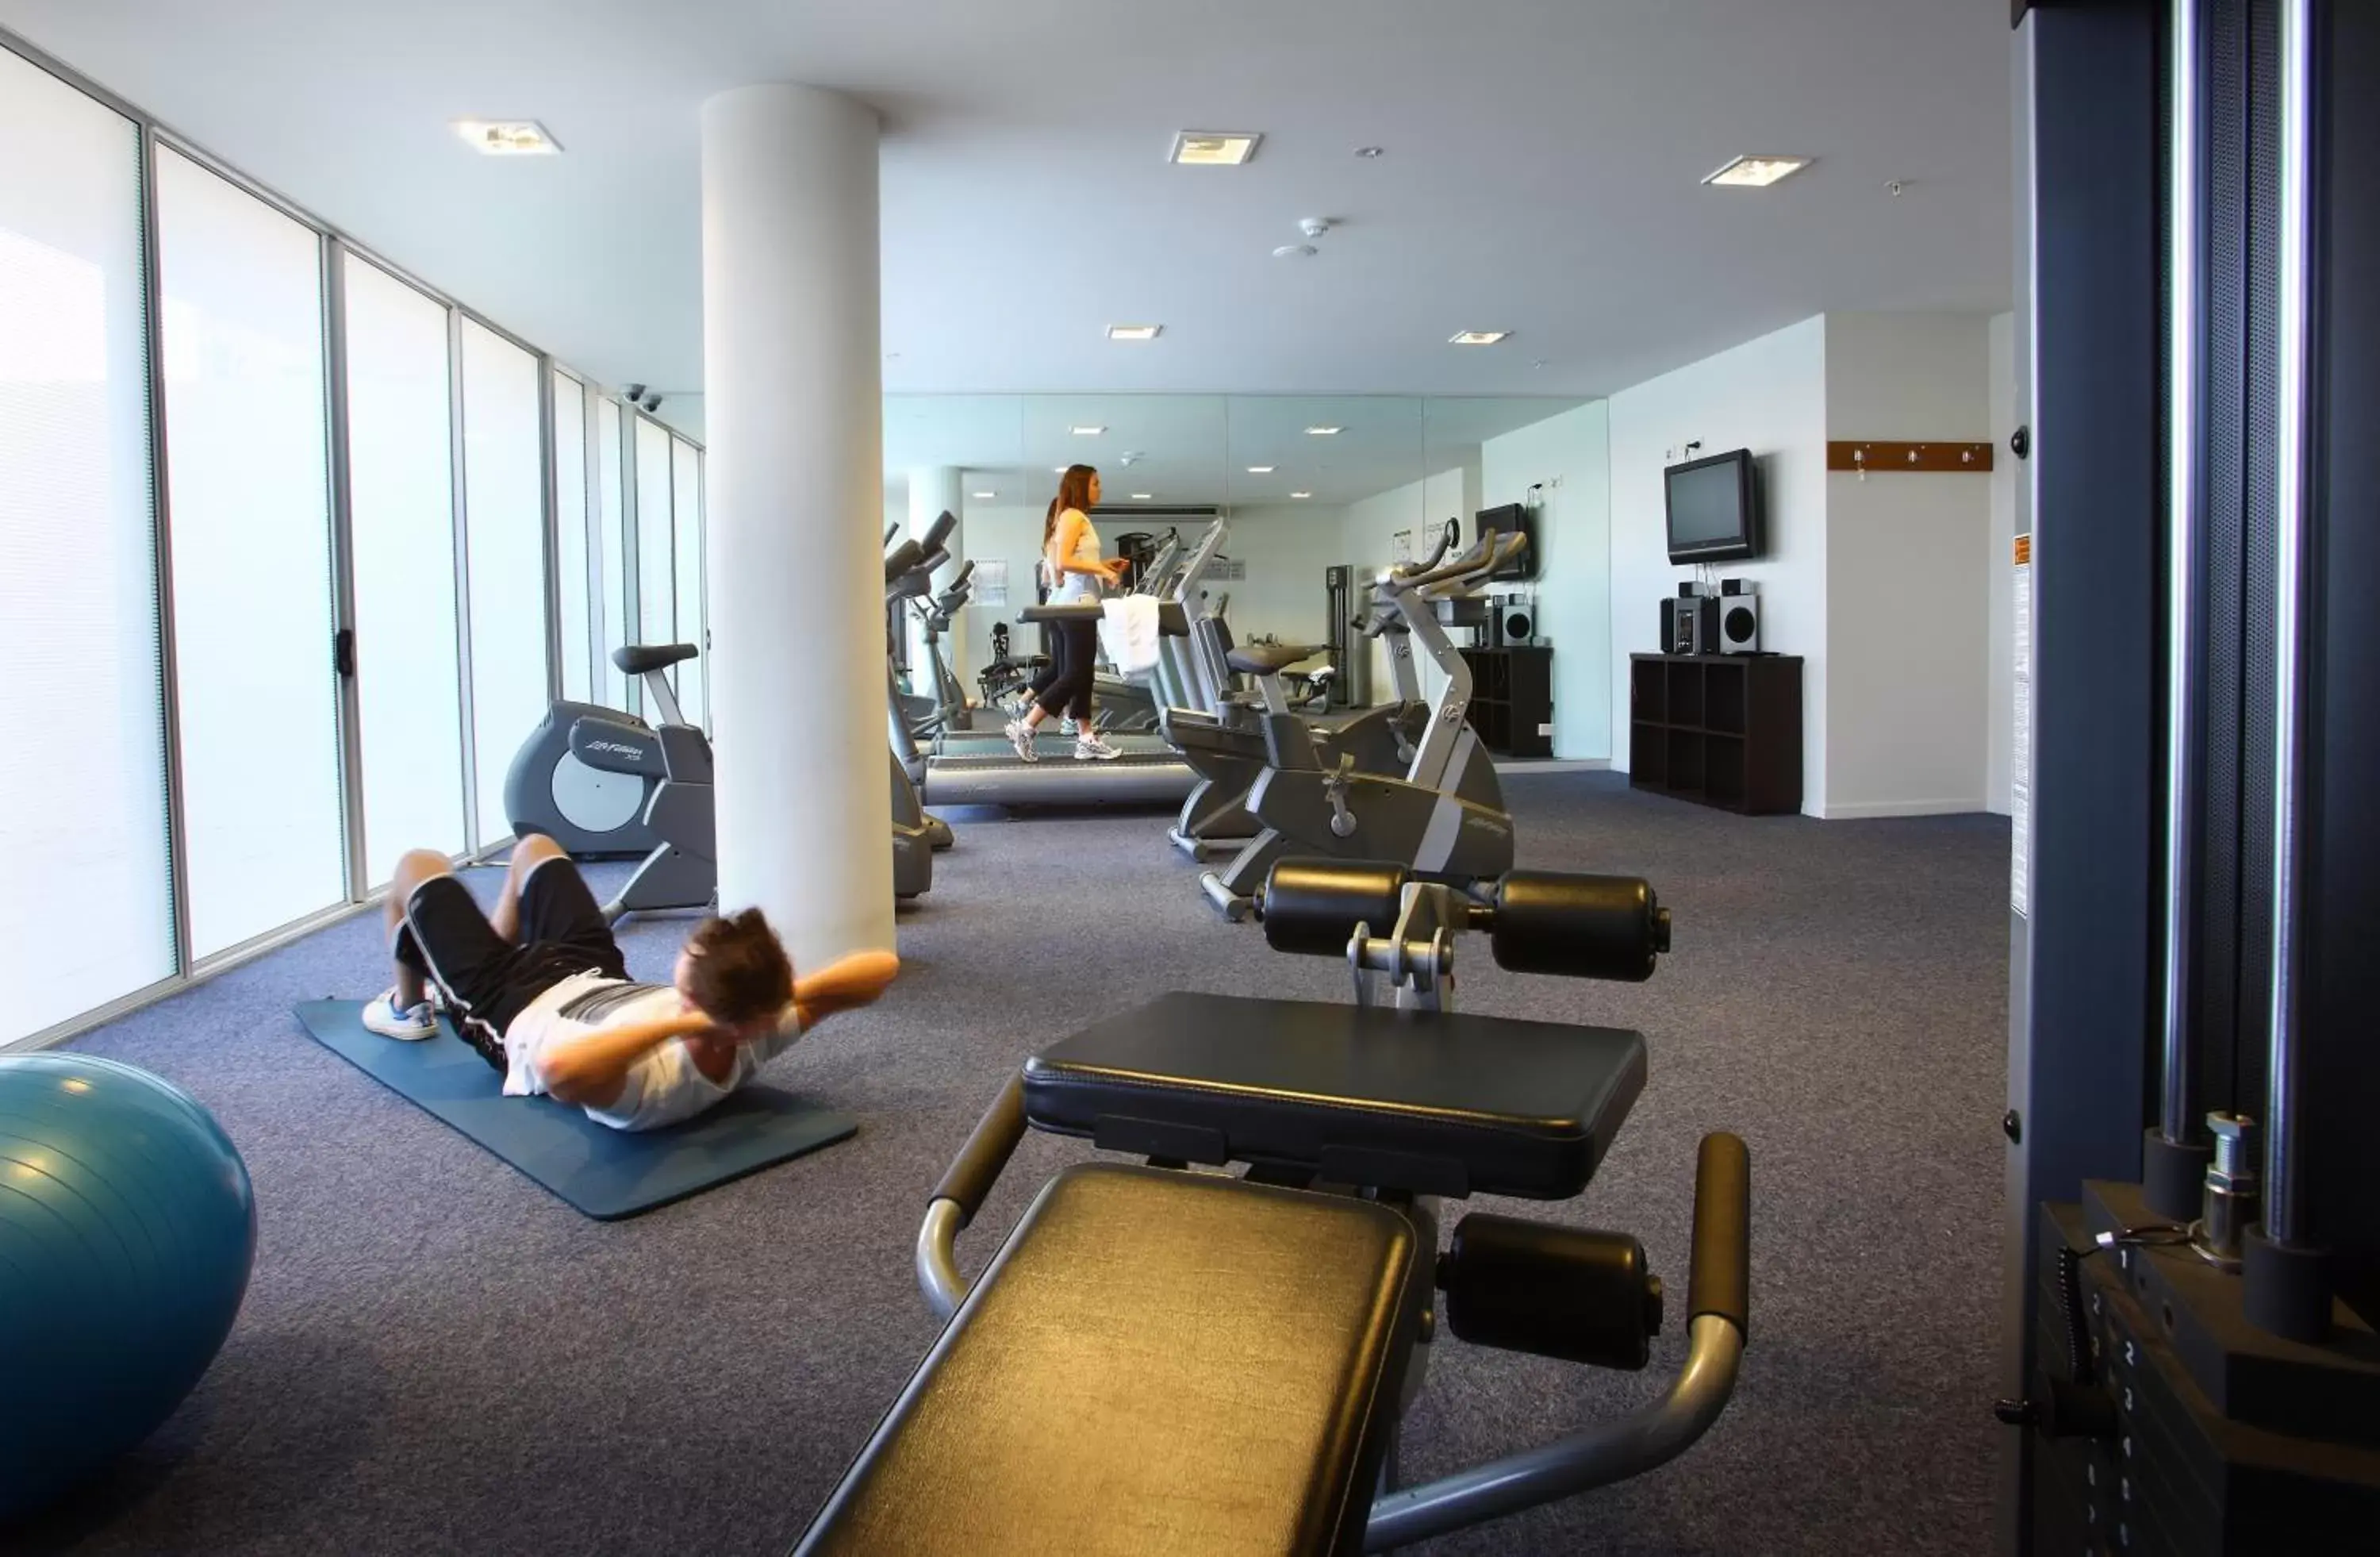 Fitness centre/facilities, Fitness Center/Facilities in Aspect Caloundra